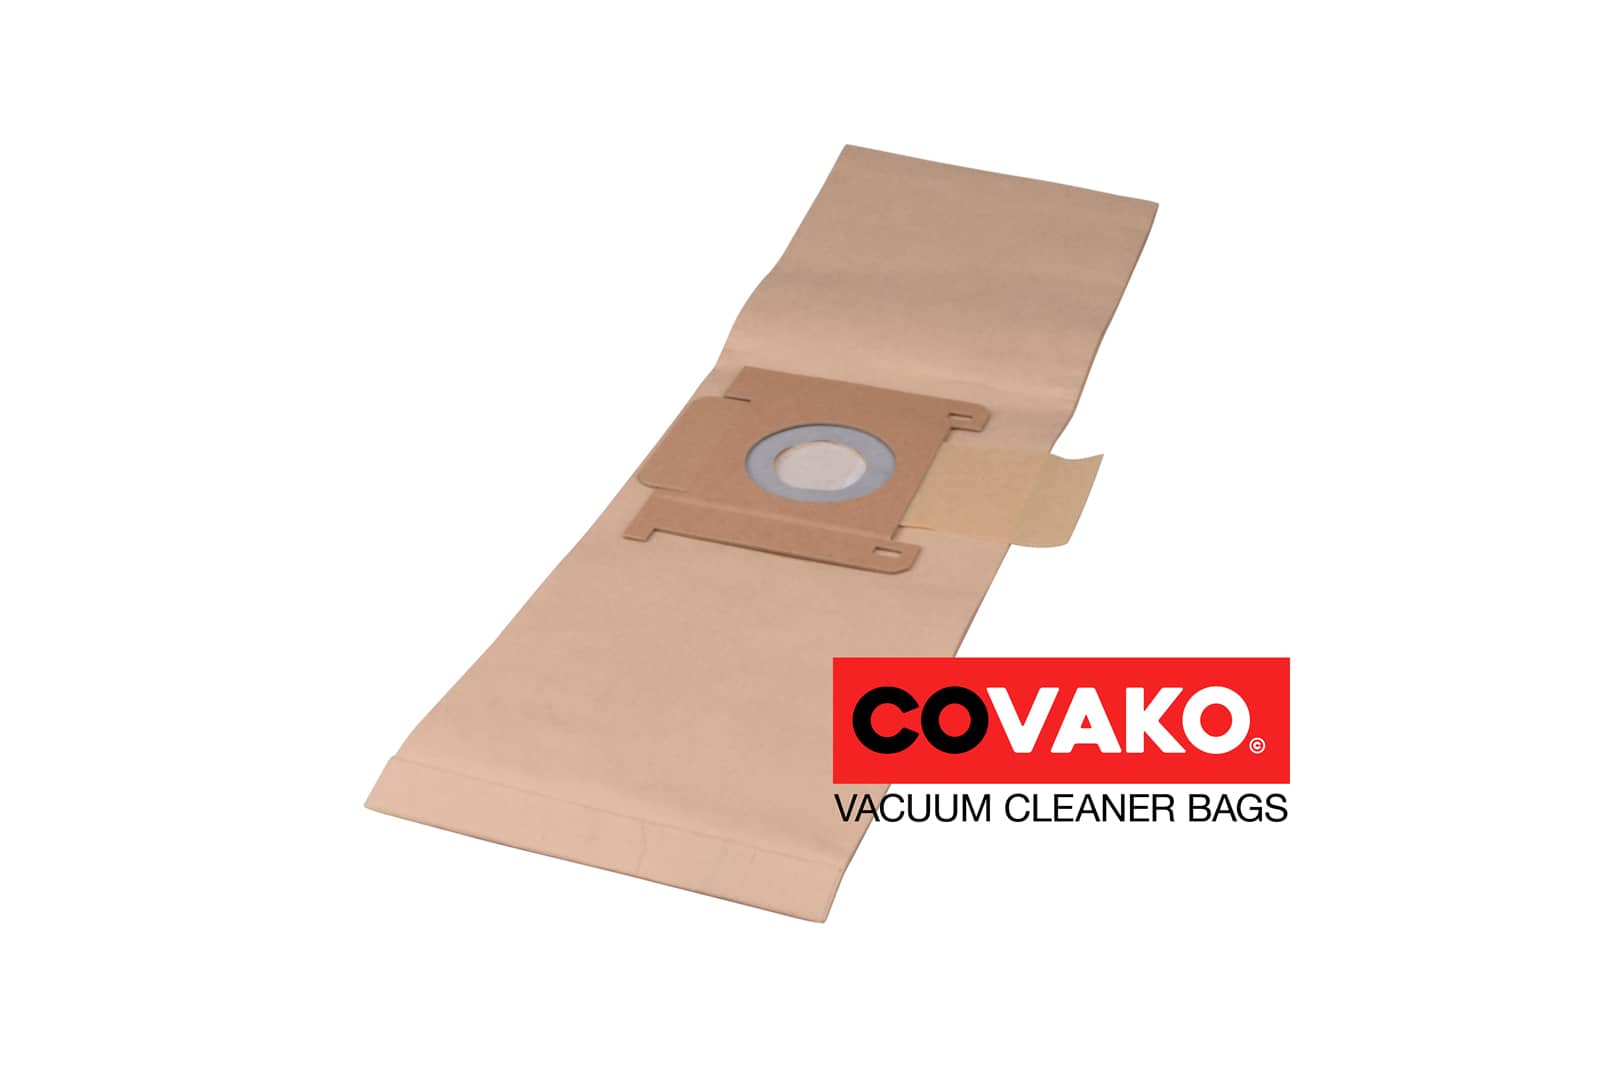 Clean a la Card K100220094830 / Paper - Clean a la Card vacuum cleaner bags